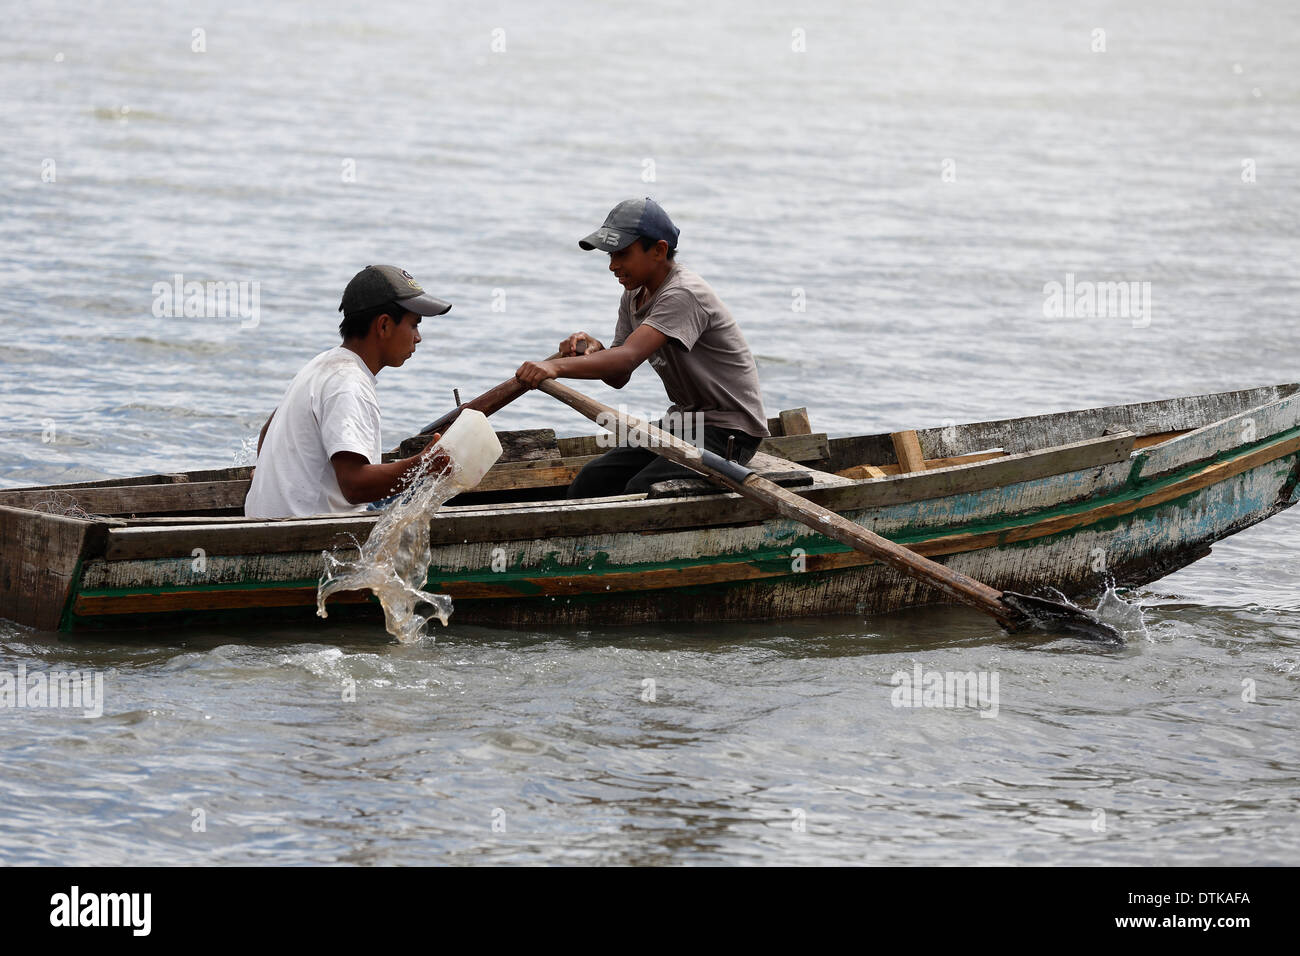 Young men in a row boat, Lago de Apanas, Nicaragua Stock Photo